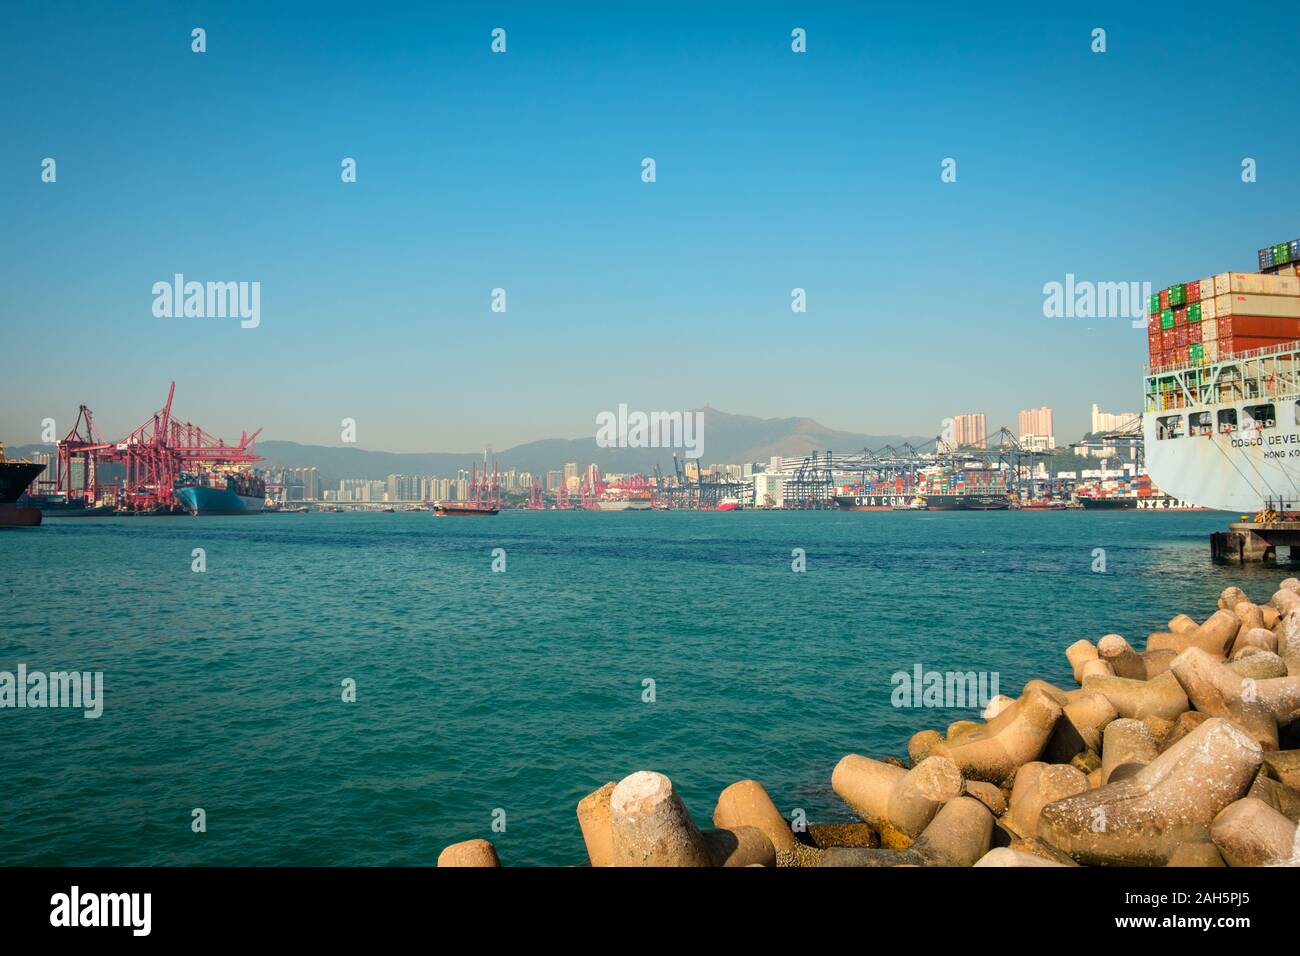 HongKong, China - November 2019: Containerschiffe in der Nähe von Fracht Hafen Logistik Zentrum in Hongkong Stockfoto